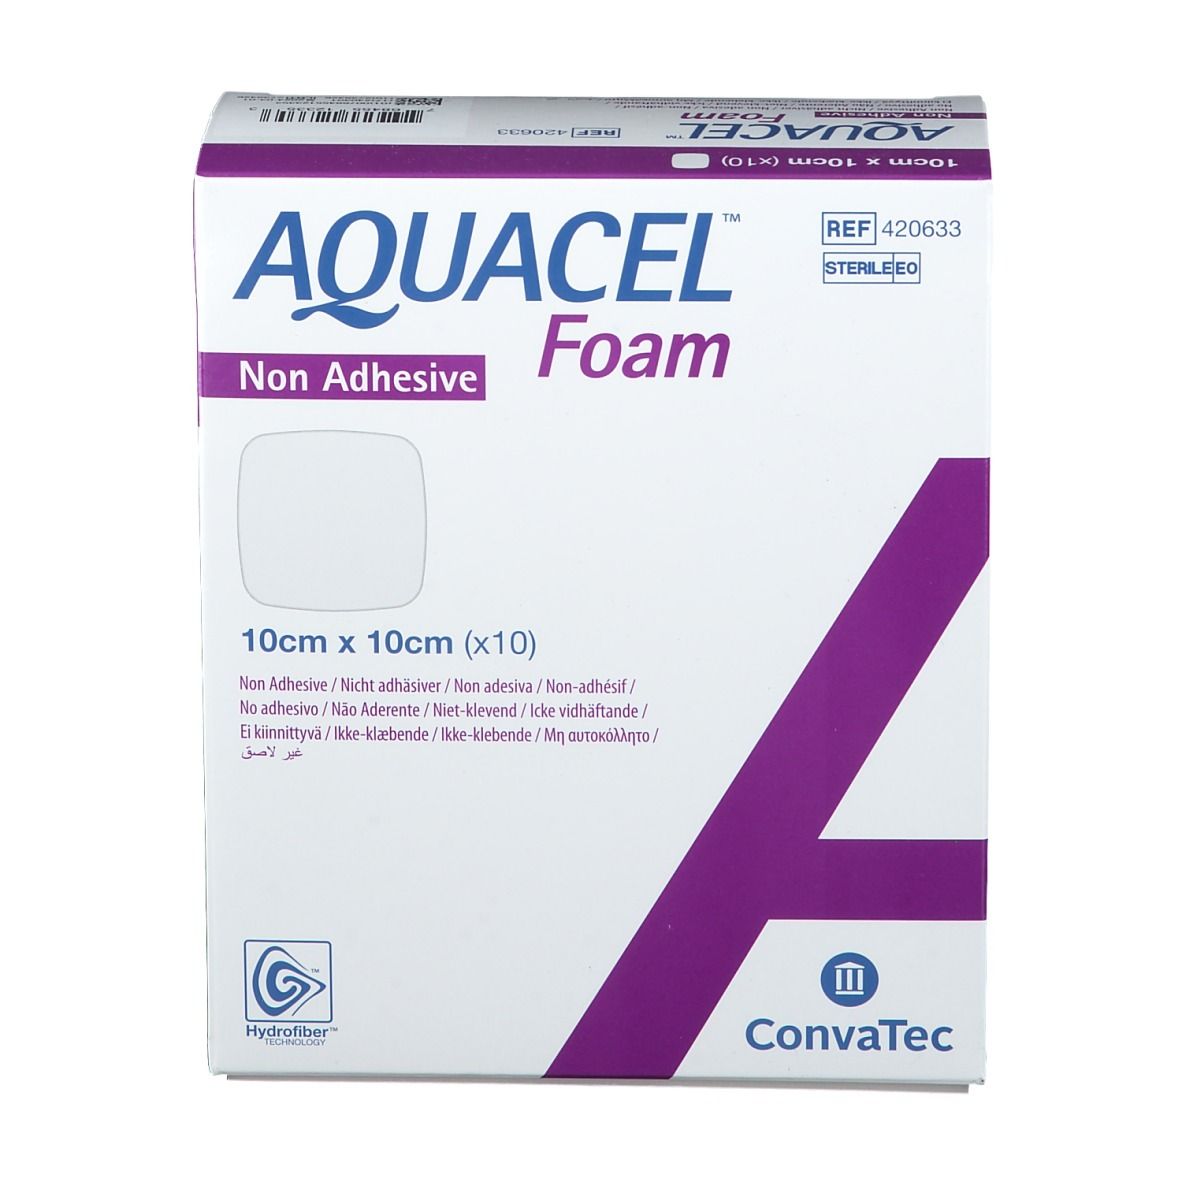 AQUACEL™ Foam nicht adhäsiv 10x10 cm Verband